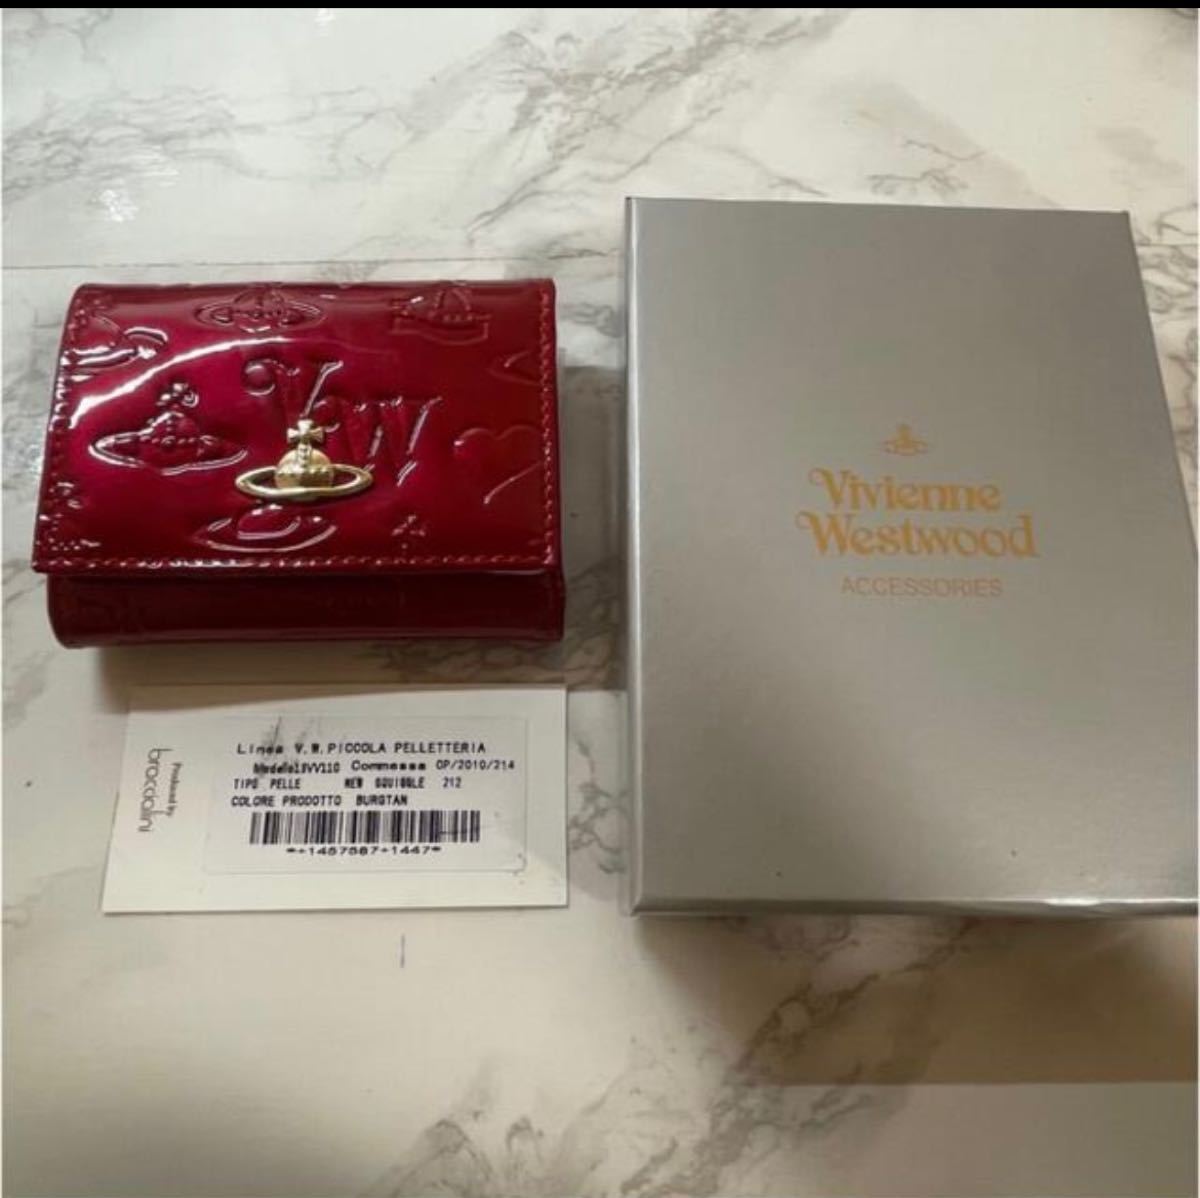 Vivienne Westwood ヴィヴィアンウエストウッド 三つ折り財布 ヴィヴィアンウェストウッド エナメル財布 赤 レッド